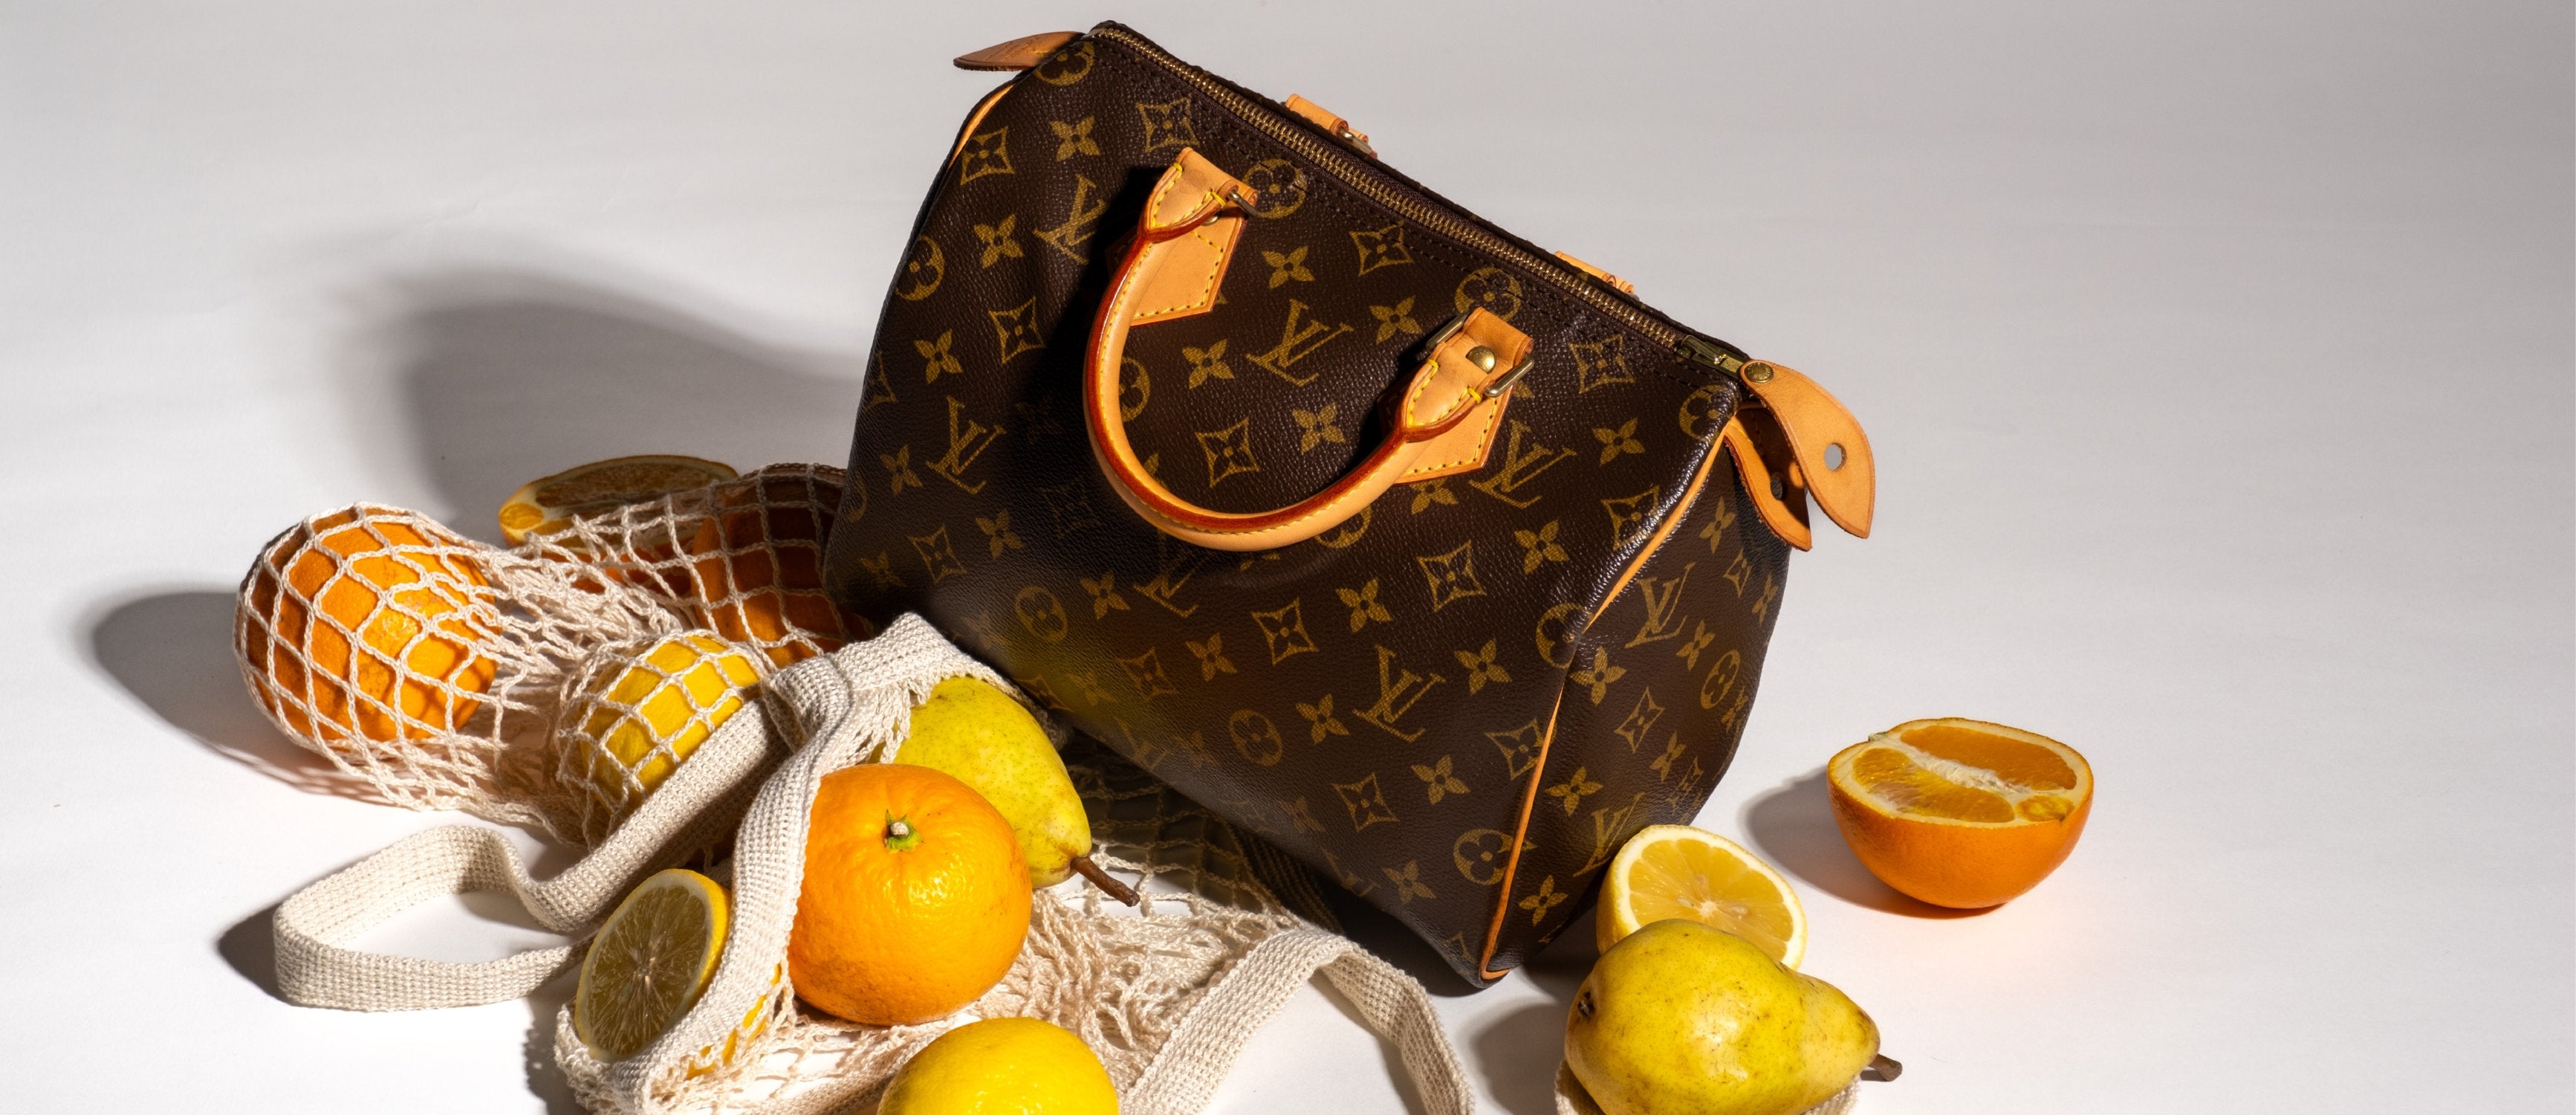 Louis Vuitton - Authenticated Handbag - Patent Leather Beige Plain for Women, Very Good Condition